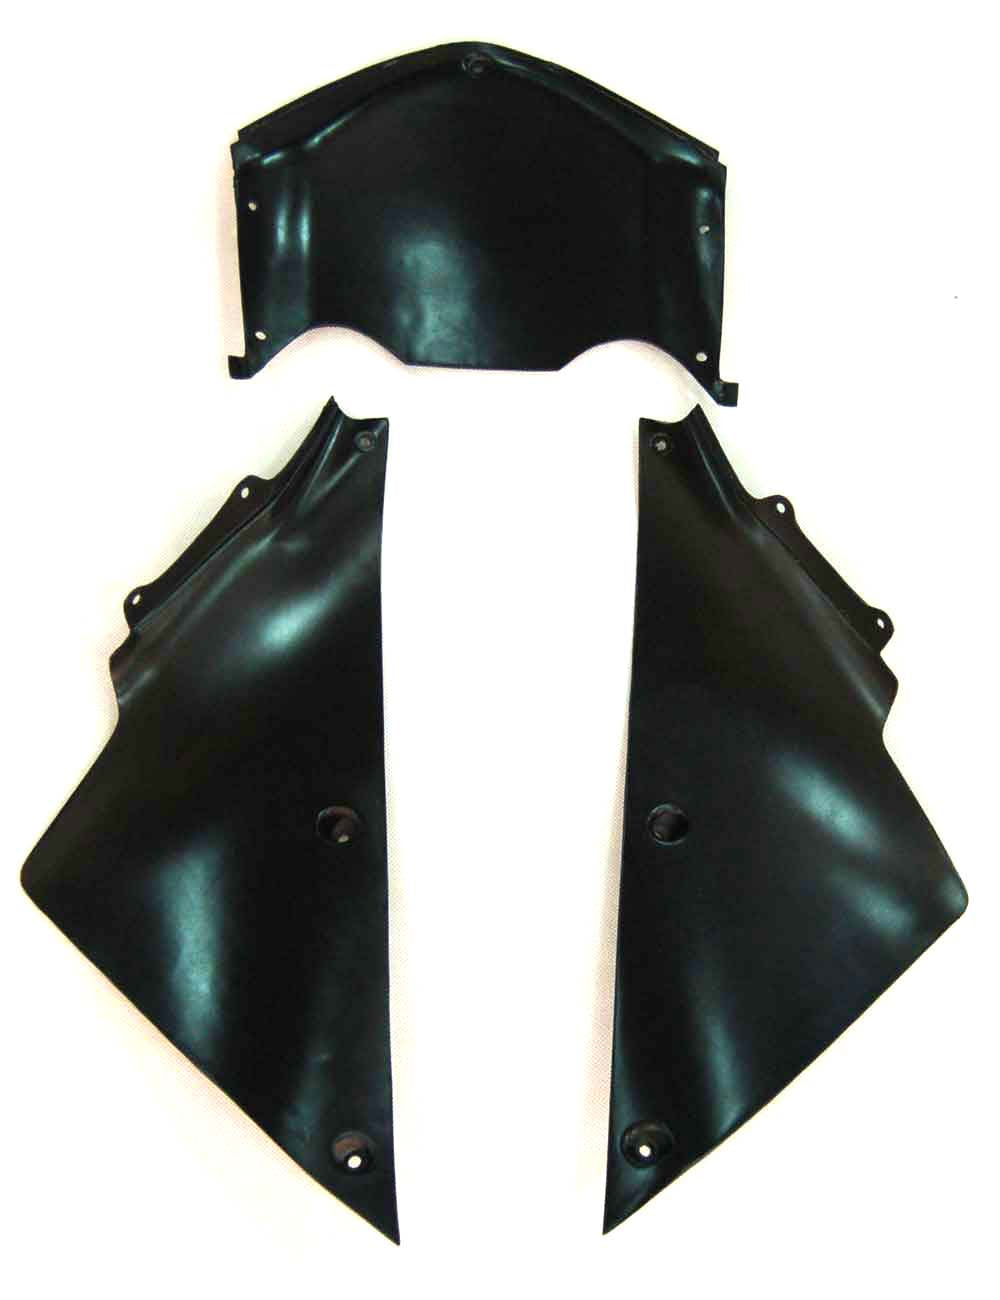 for-ninja-zx14r-2006-2011-green-black-nakano-bodywork-fairing-abs-injection-molded-plastics-set-7